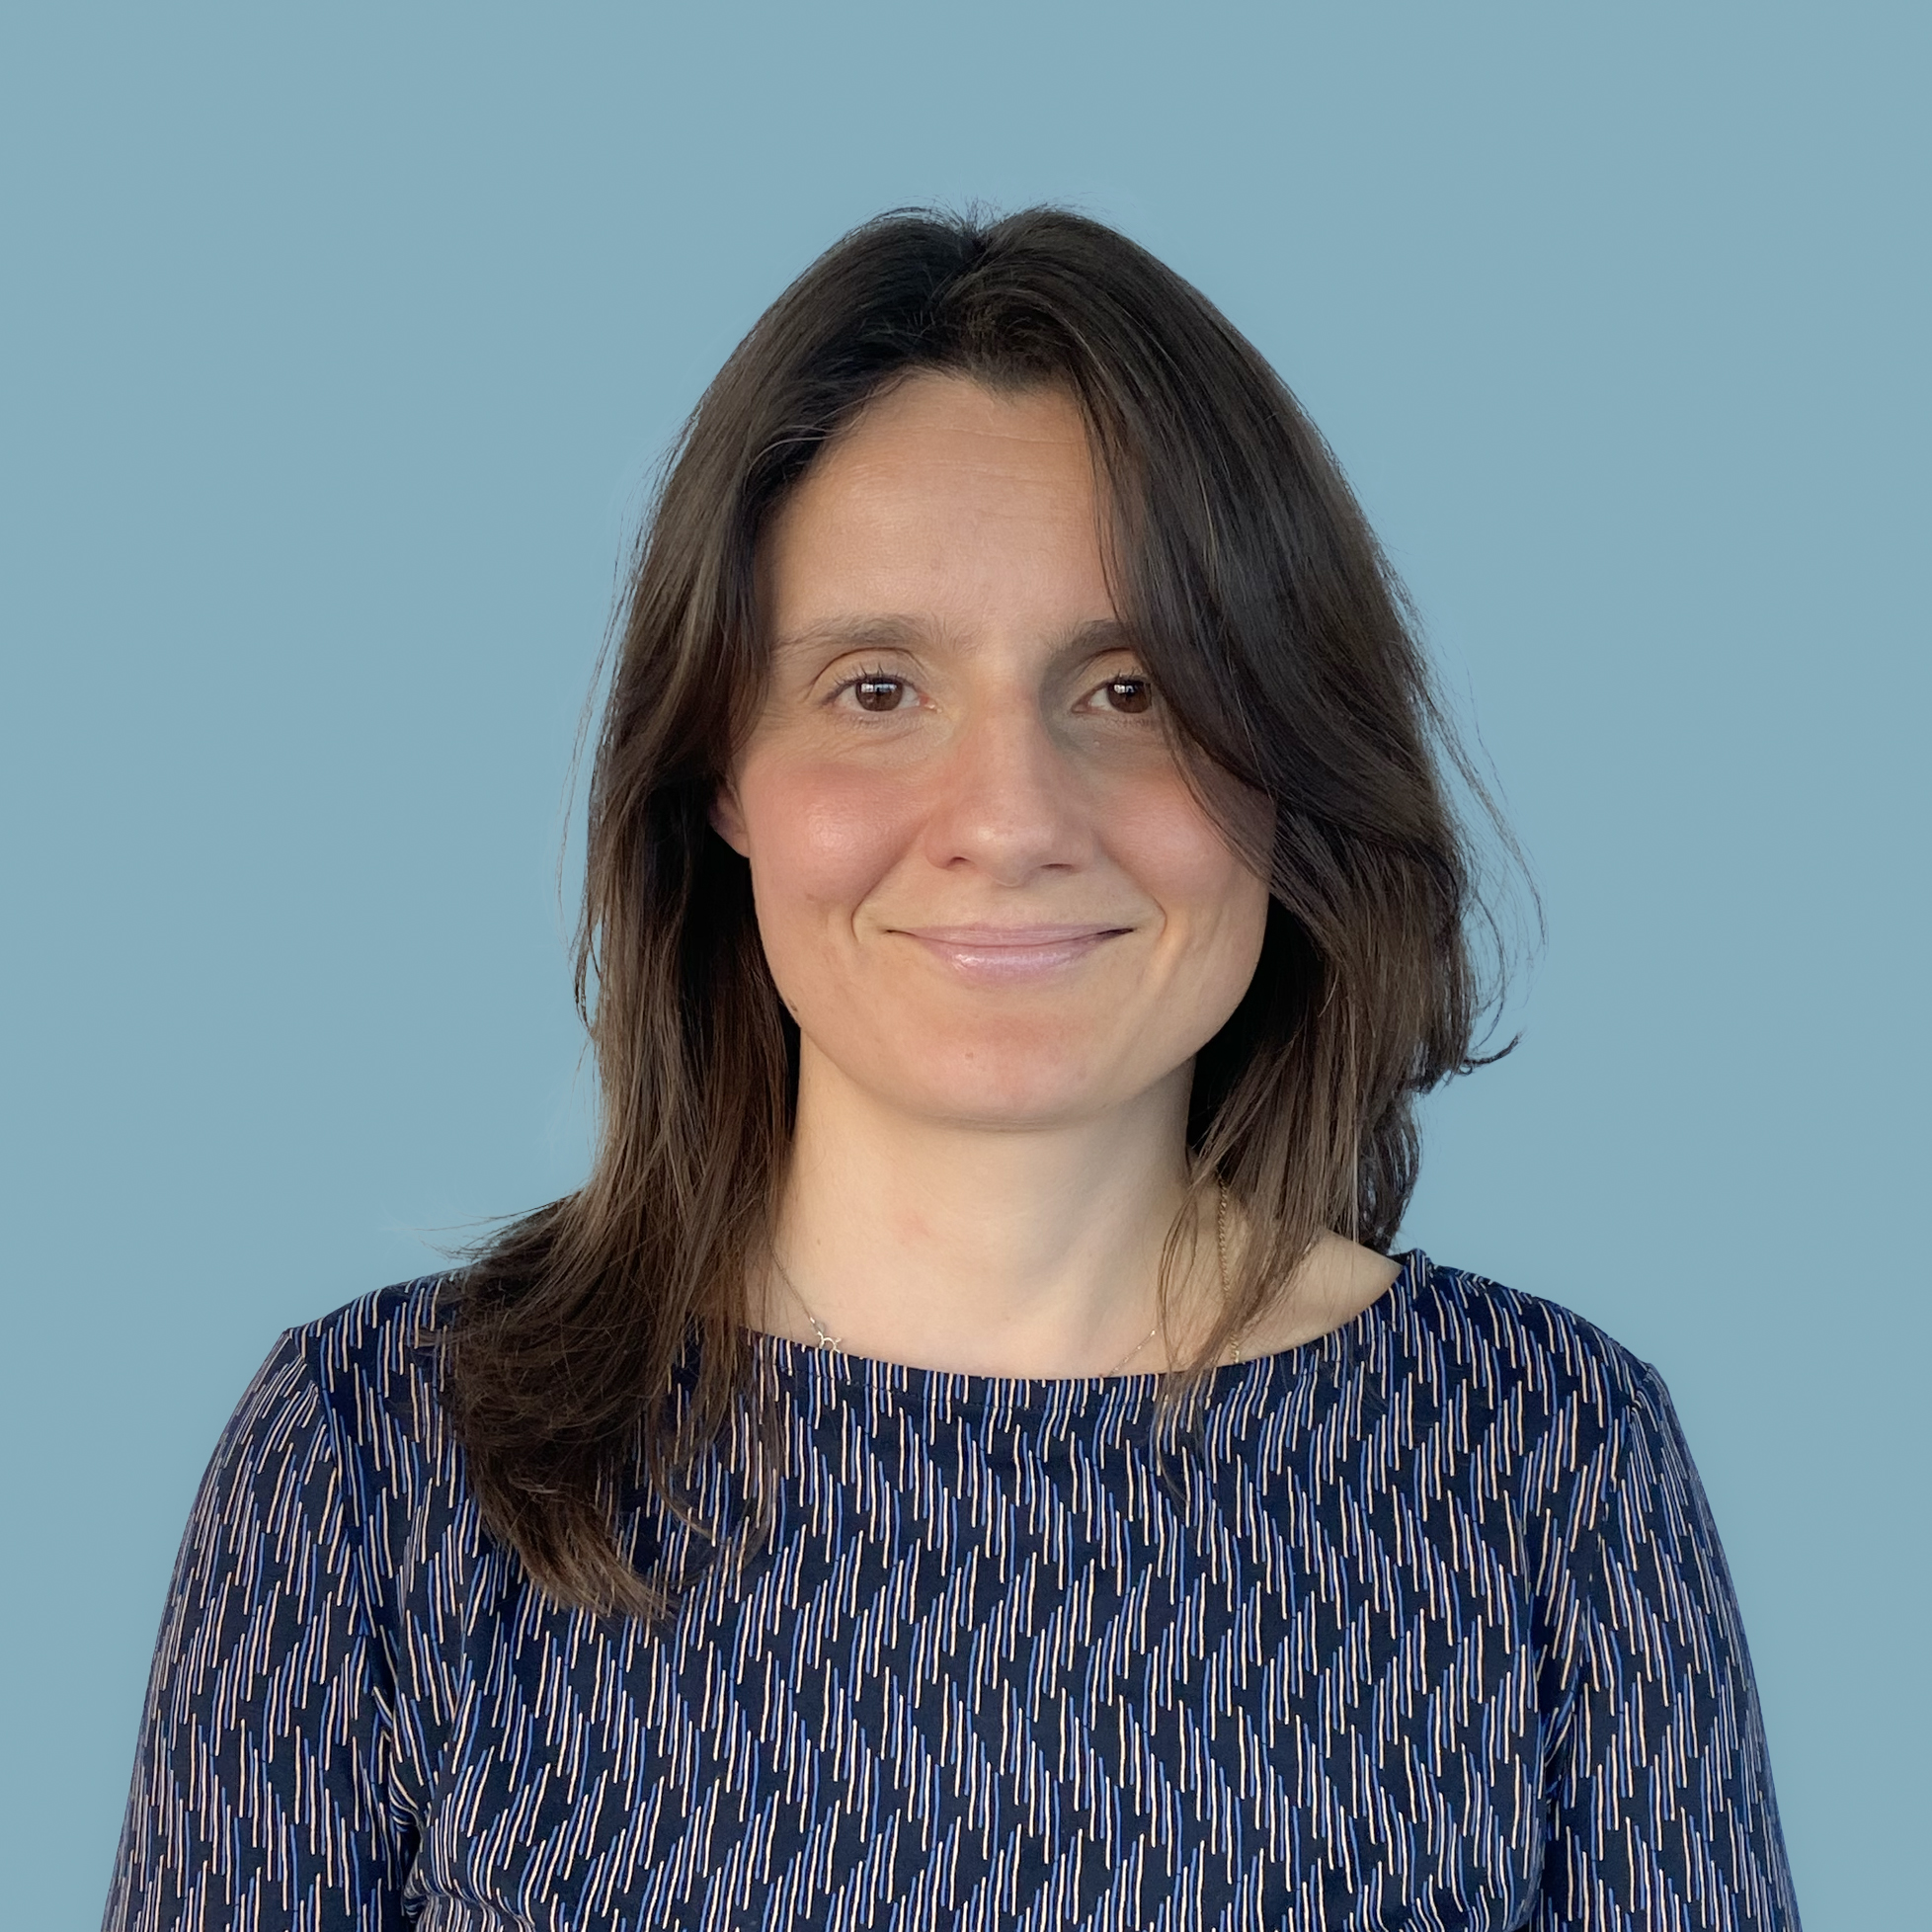 A profile photograph of Silvia Guizzardi, Senior Adviser for Impact at Oak Foundation.